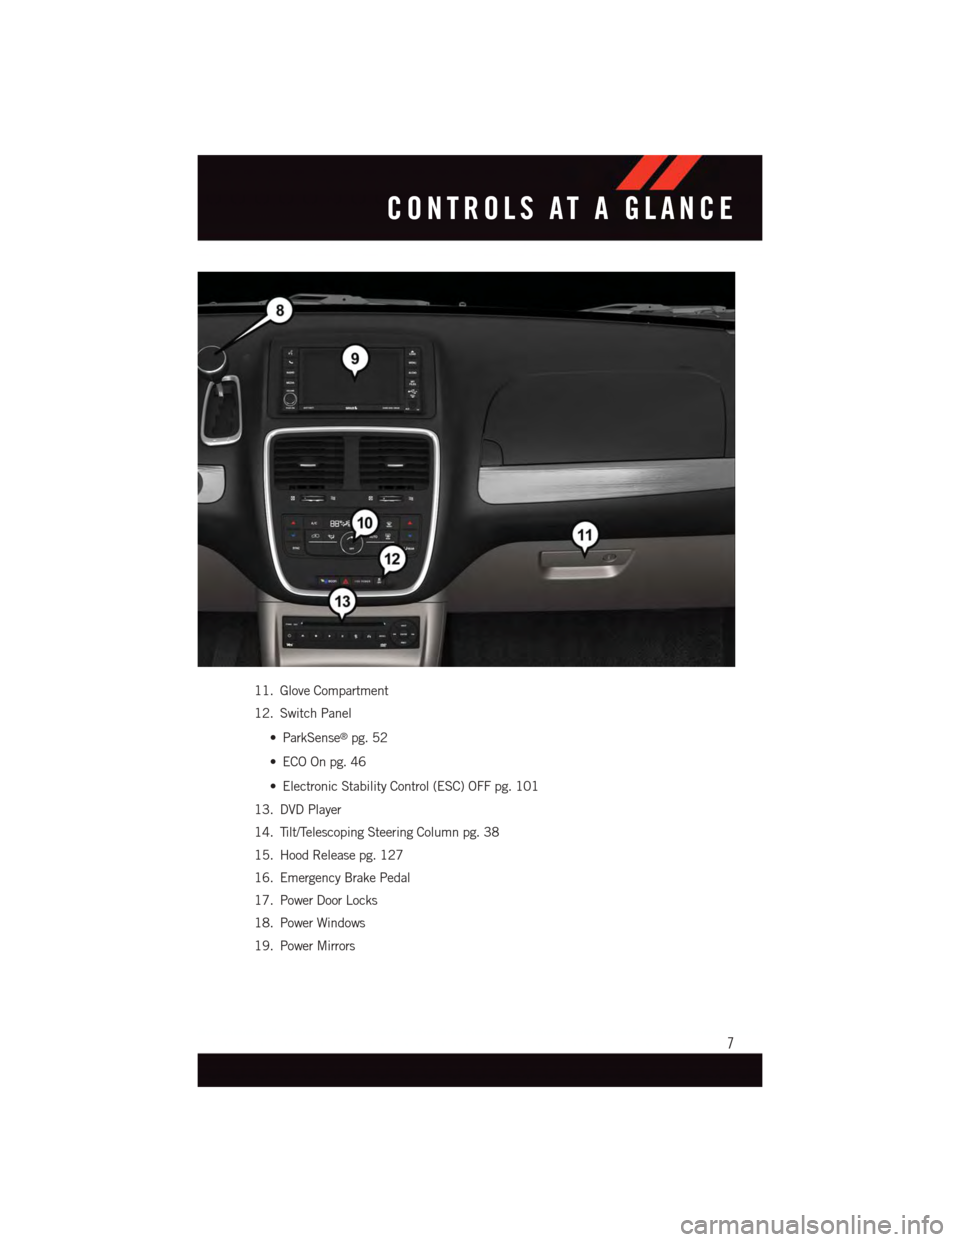 DODGE GRAND CARAVAN 2015 5.G User Guide 11. Glove Compartment
12. Switch Panel
•ParkSense®pg. 52
•ECOOnpg.46
•ElectronicStabilityControl(ESC)OFFpg.101
13. DVD Player
14. Tilt/Telescoping Steering Column pg. 38
15. Hood Release pg. 12